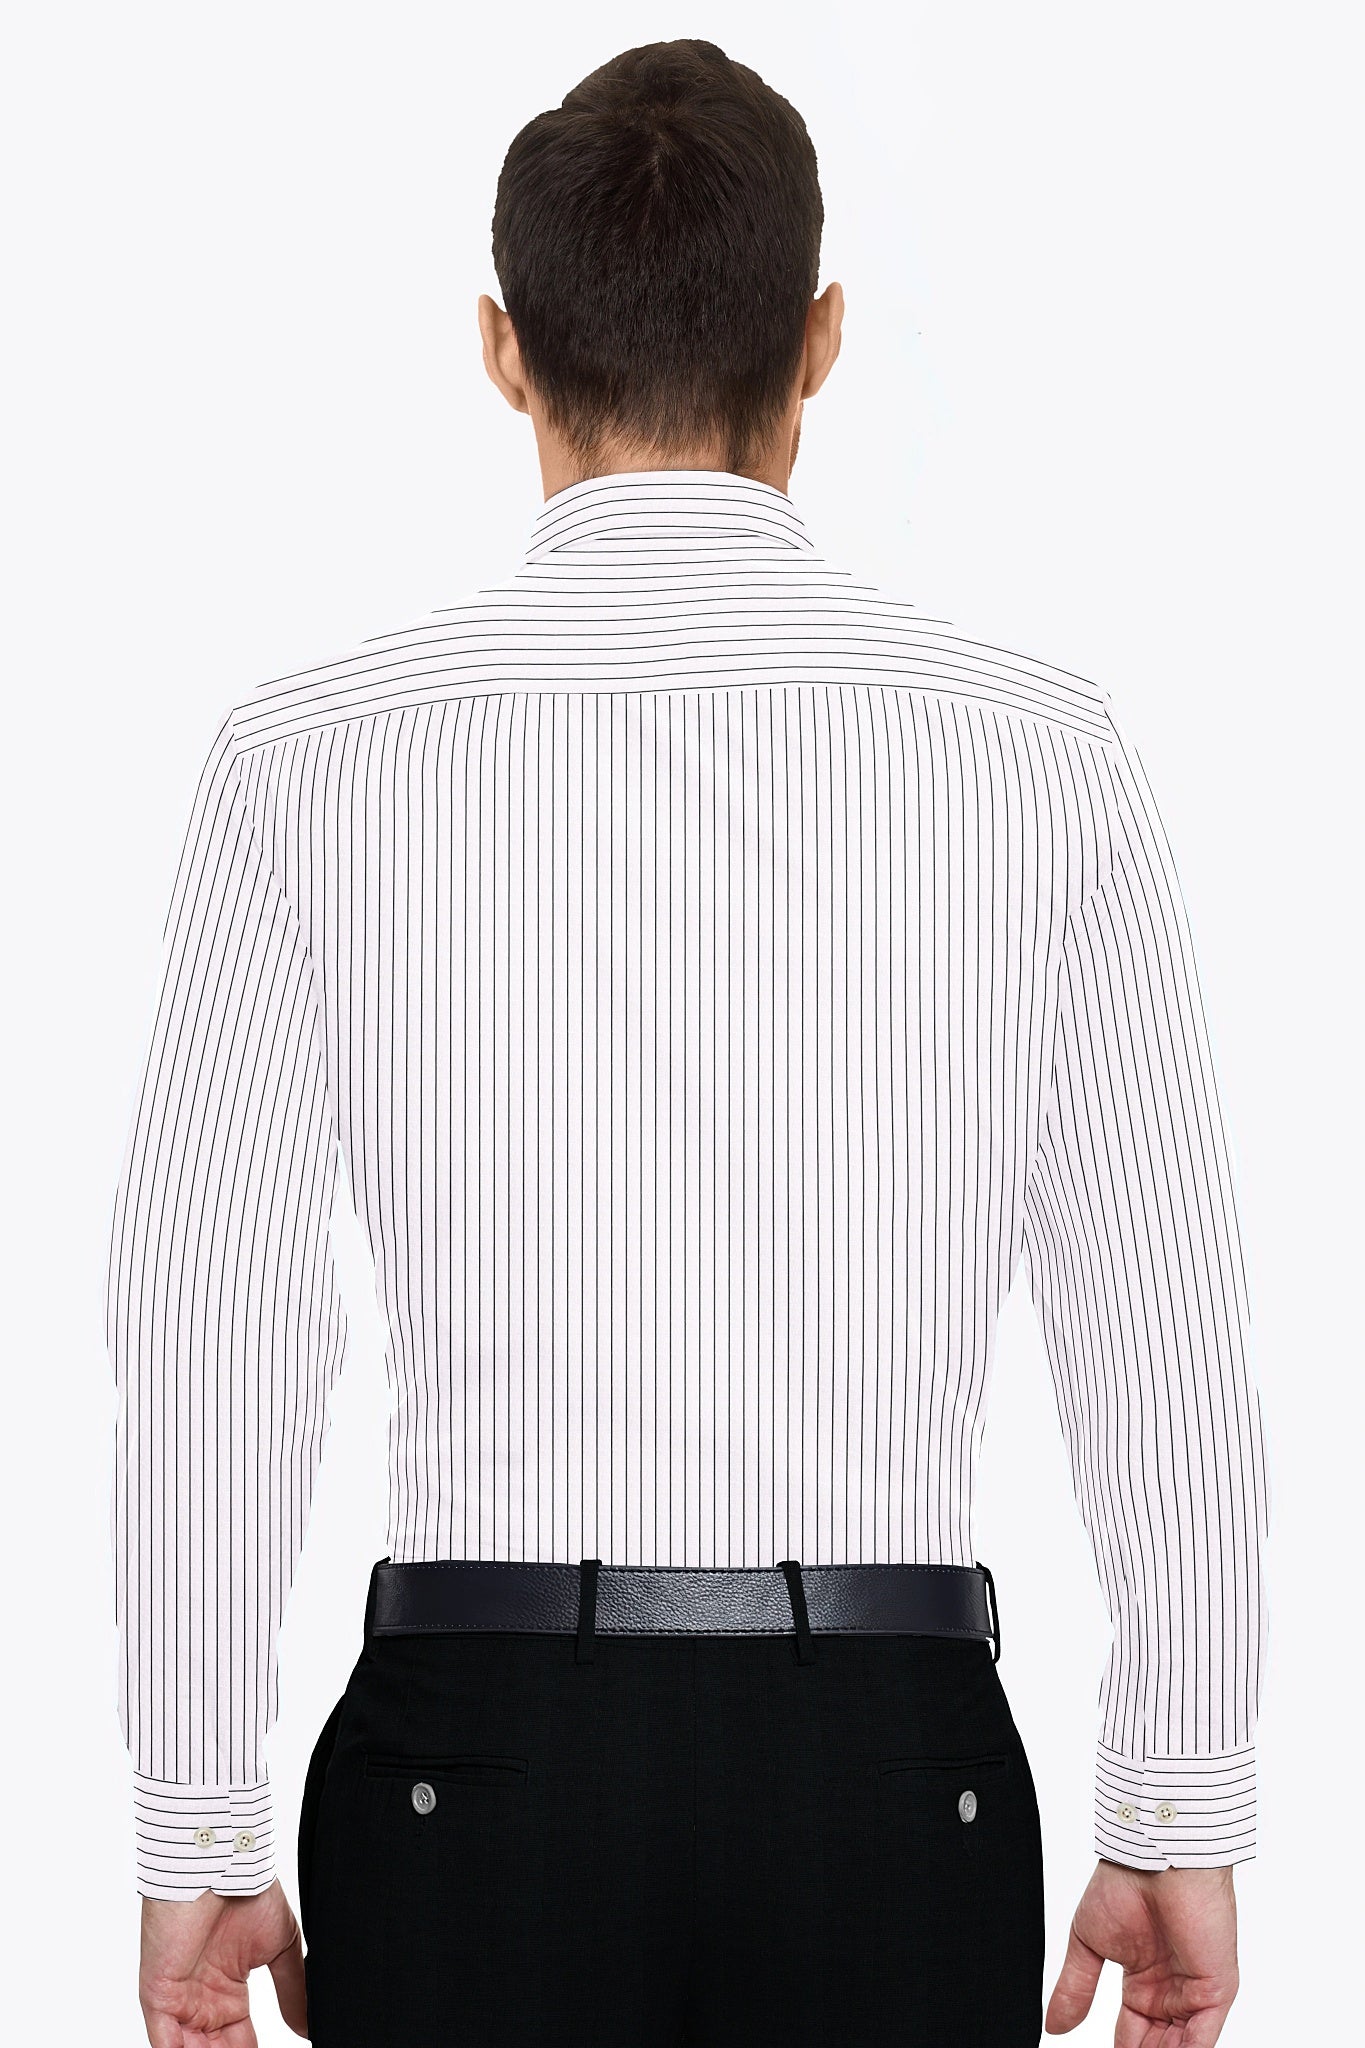 Jet Black and White Pinstripes Cotton Shirt